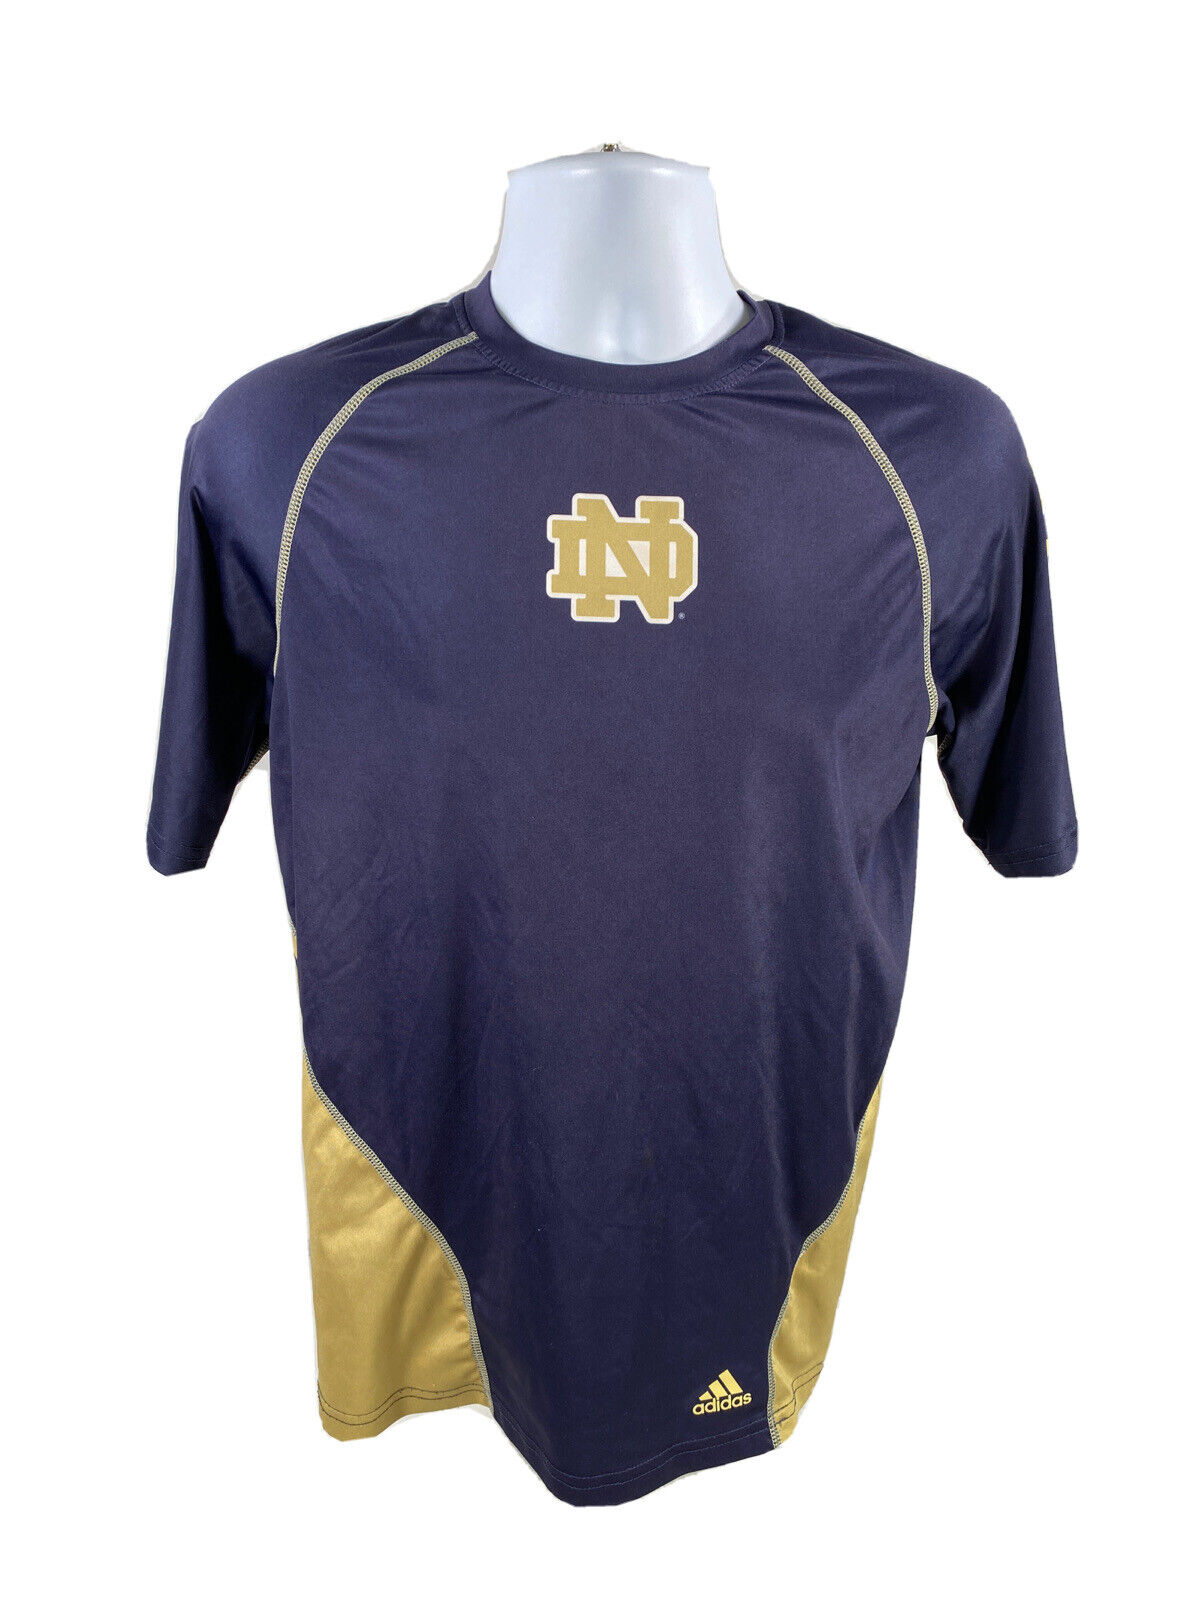 Adidas Men's Blue Short Sleeve Notre Dame Fighting Irish Shirt - S